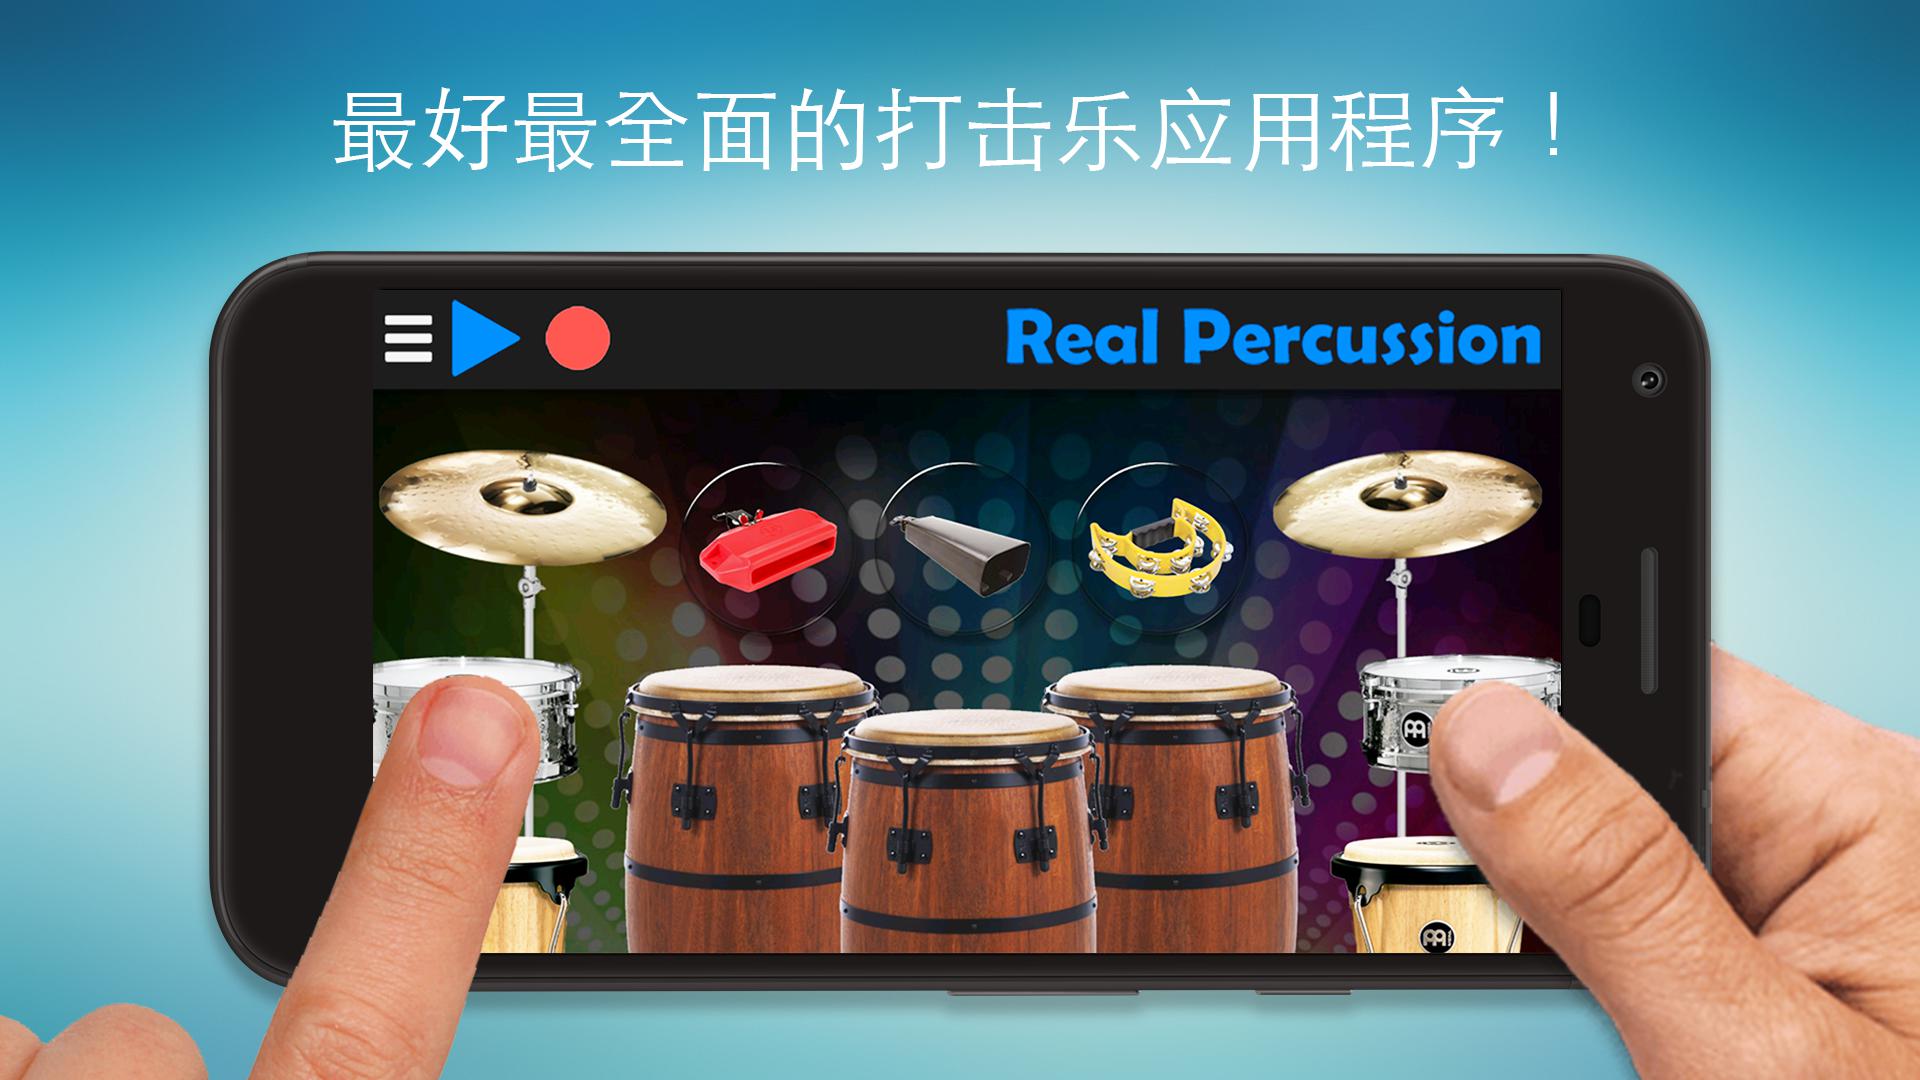 Real Percussion - 最好的打击乐器套件